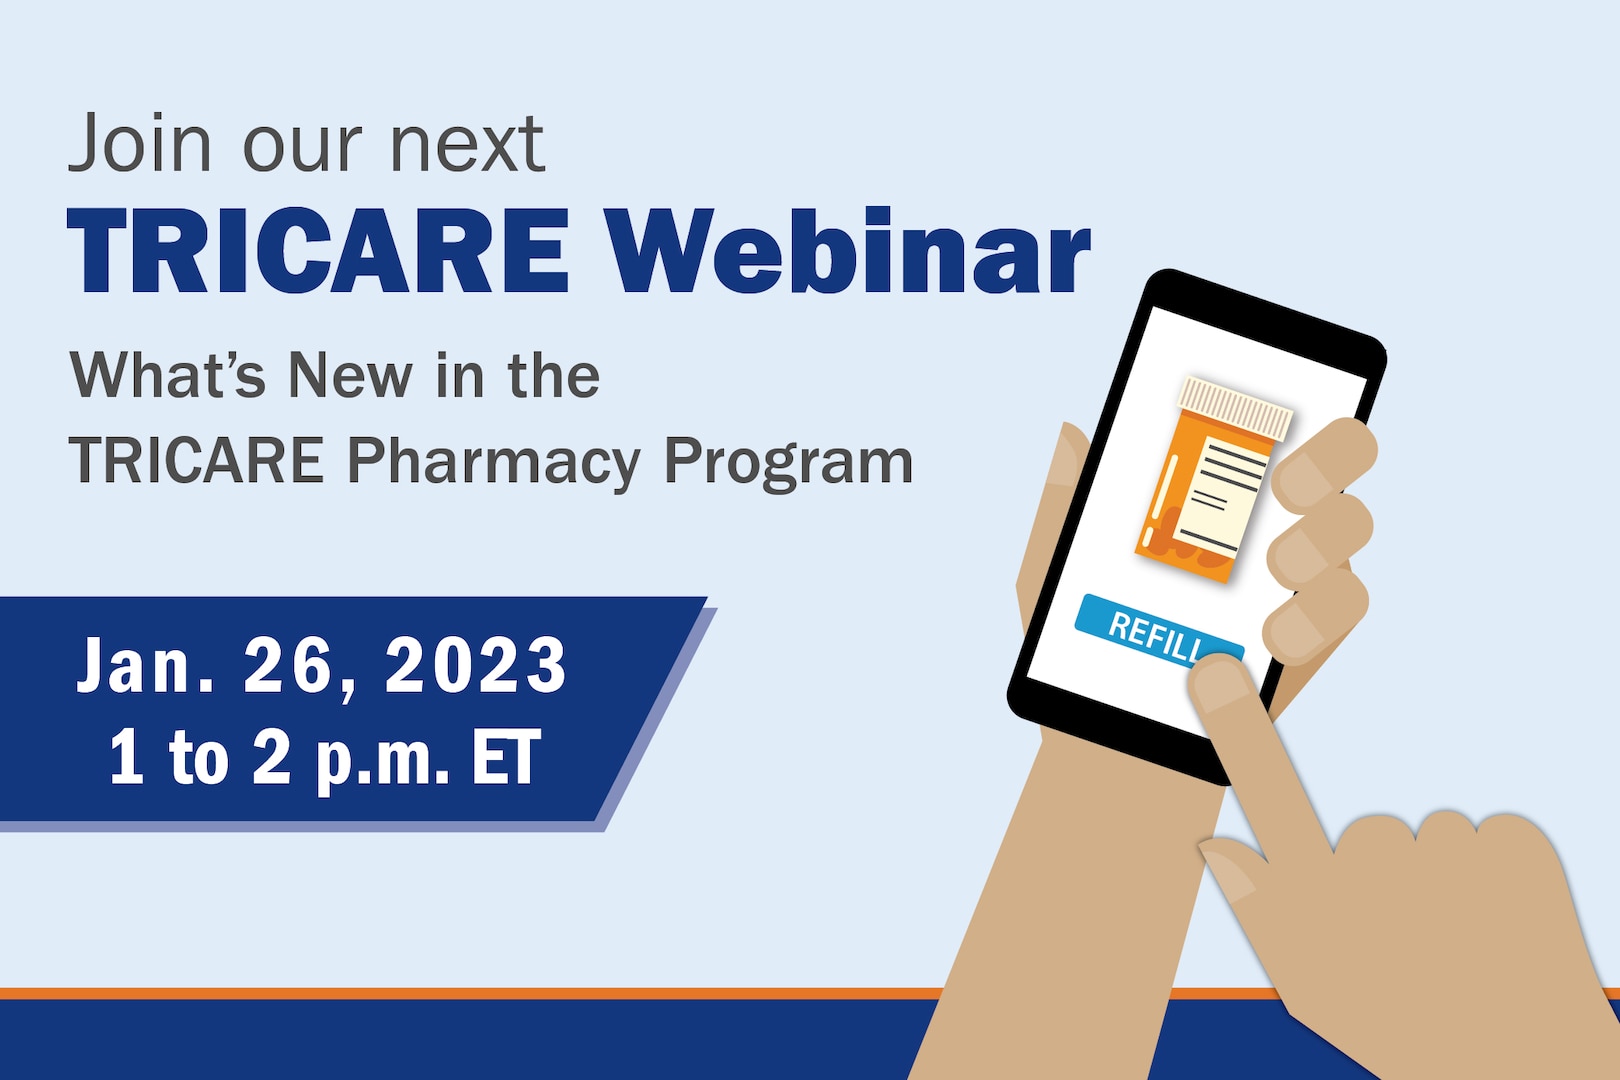 learn-what-s-new-in-tricare-pharmacy-program-at-january-webinar